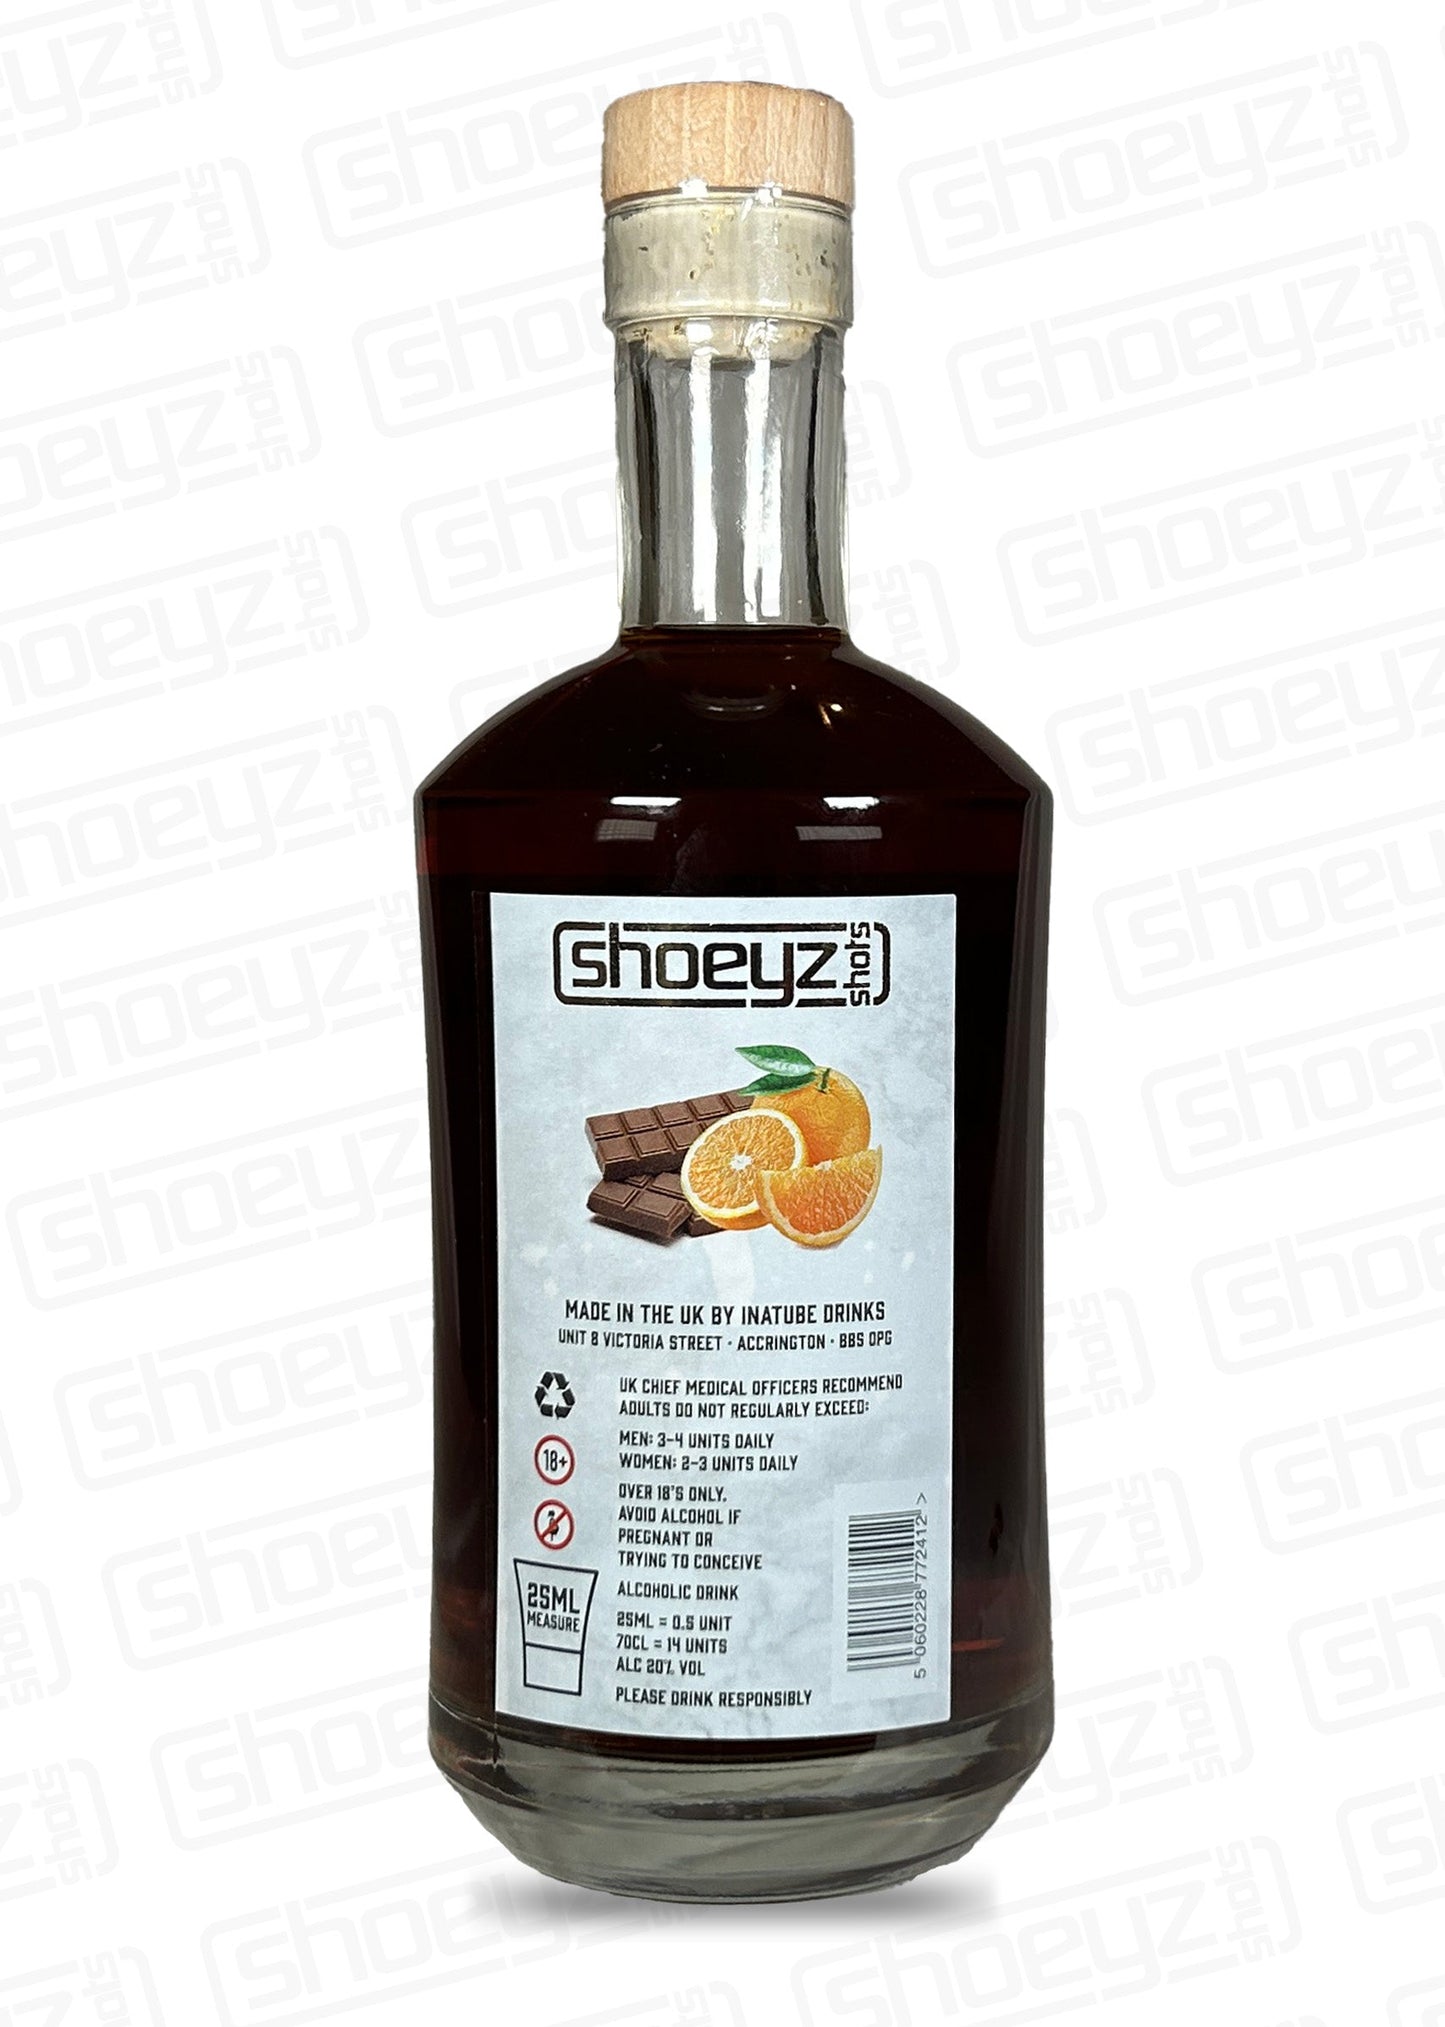 shoeyz gin bottle chocolate orange flavour rear